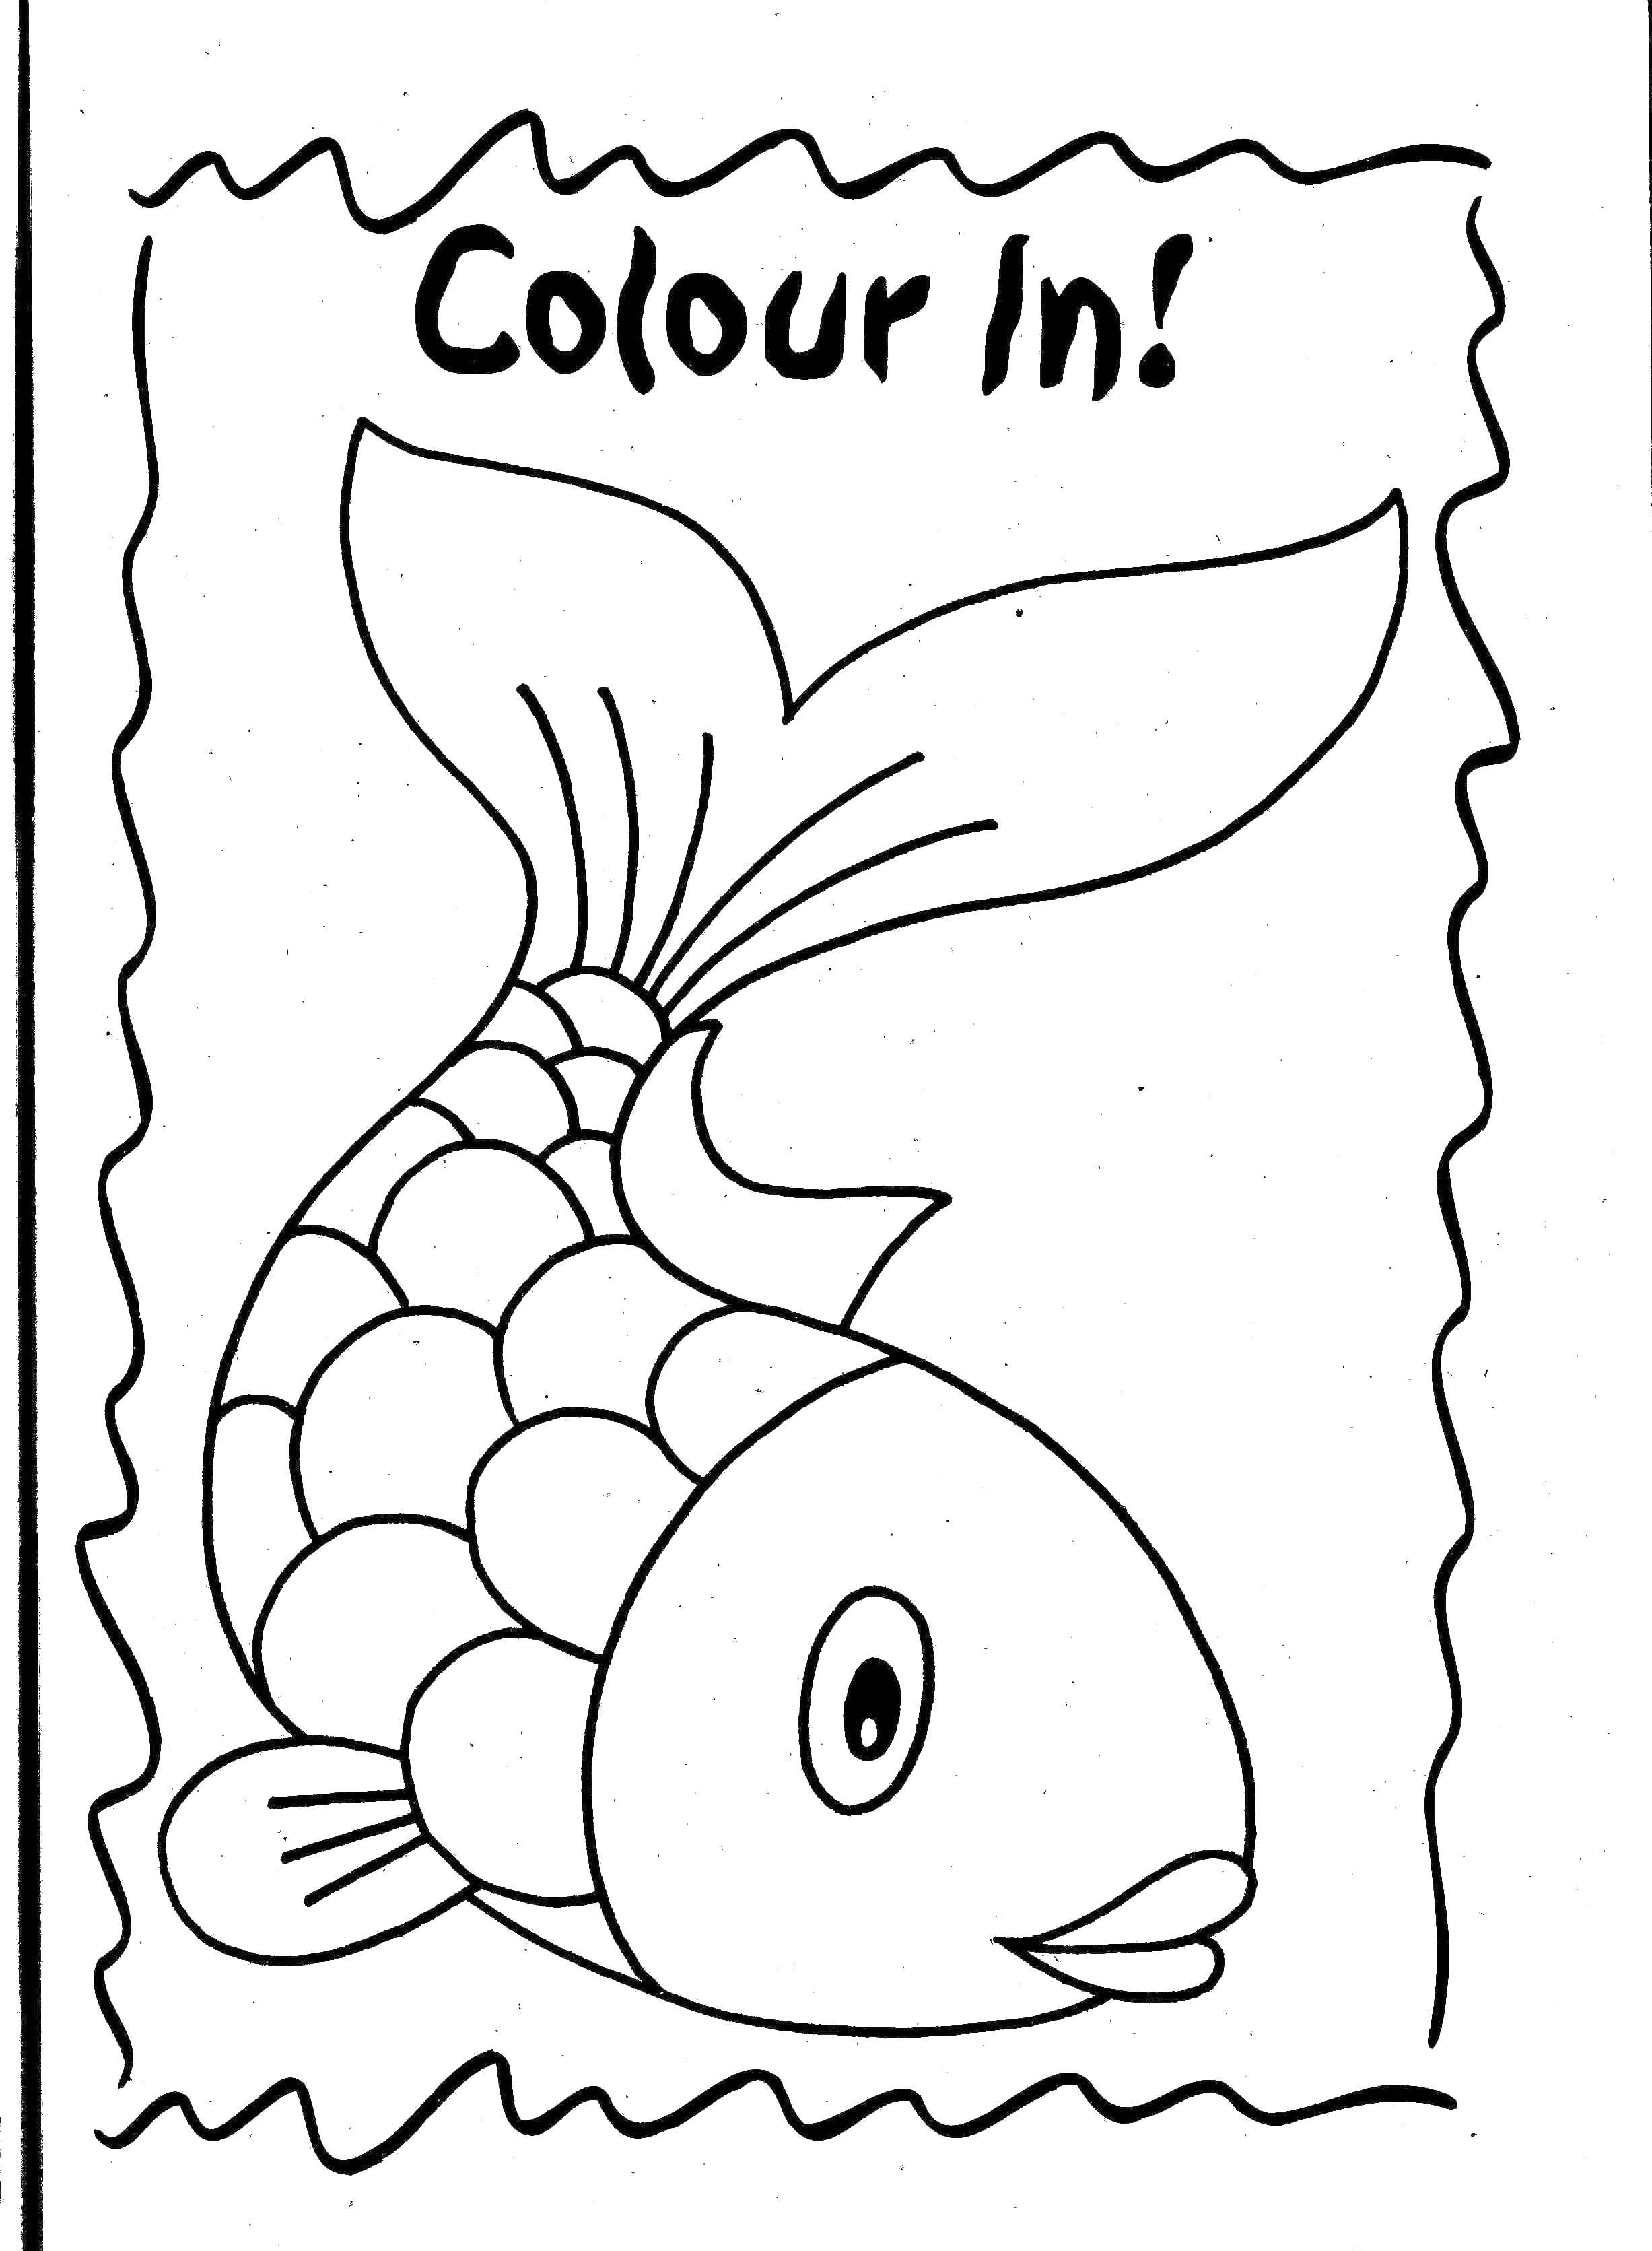 Coloring Paint a fish. Category fish. Tags:  fish, sea.